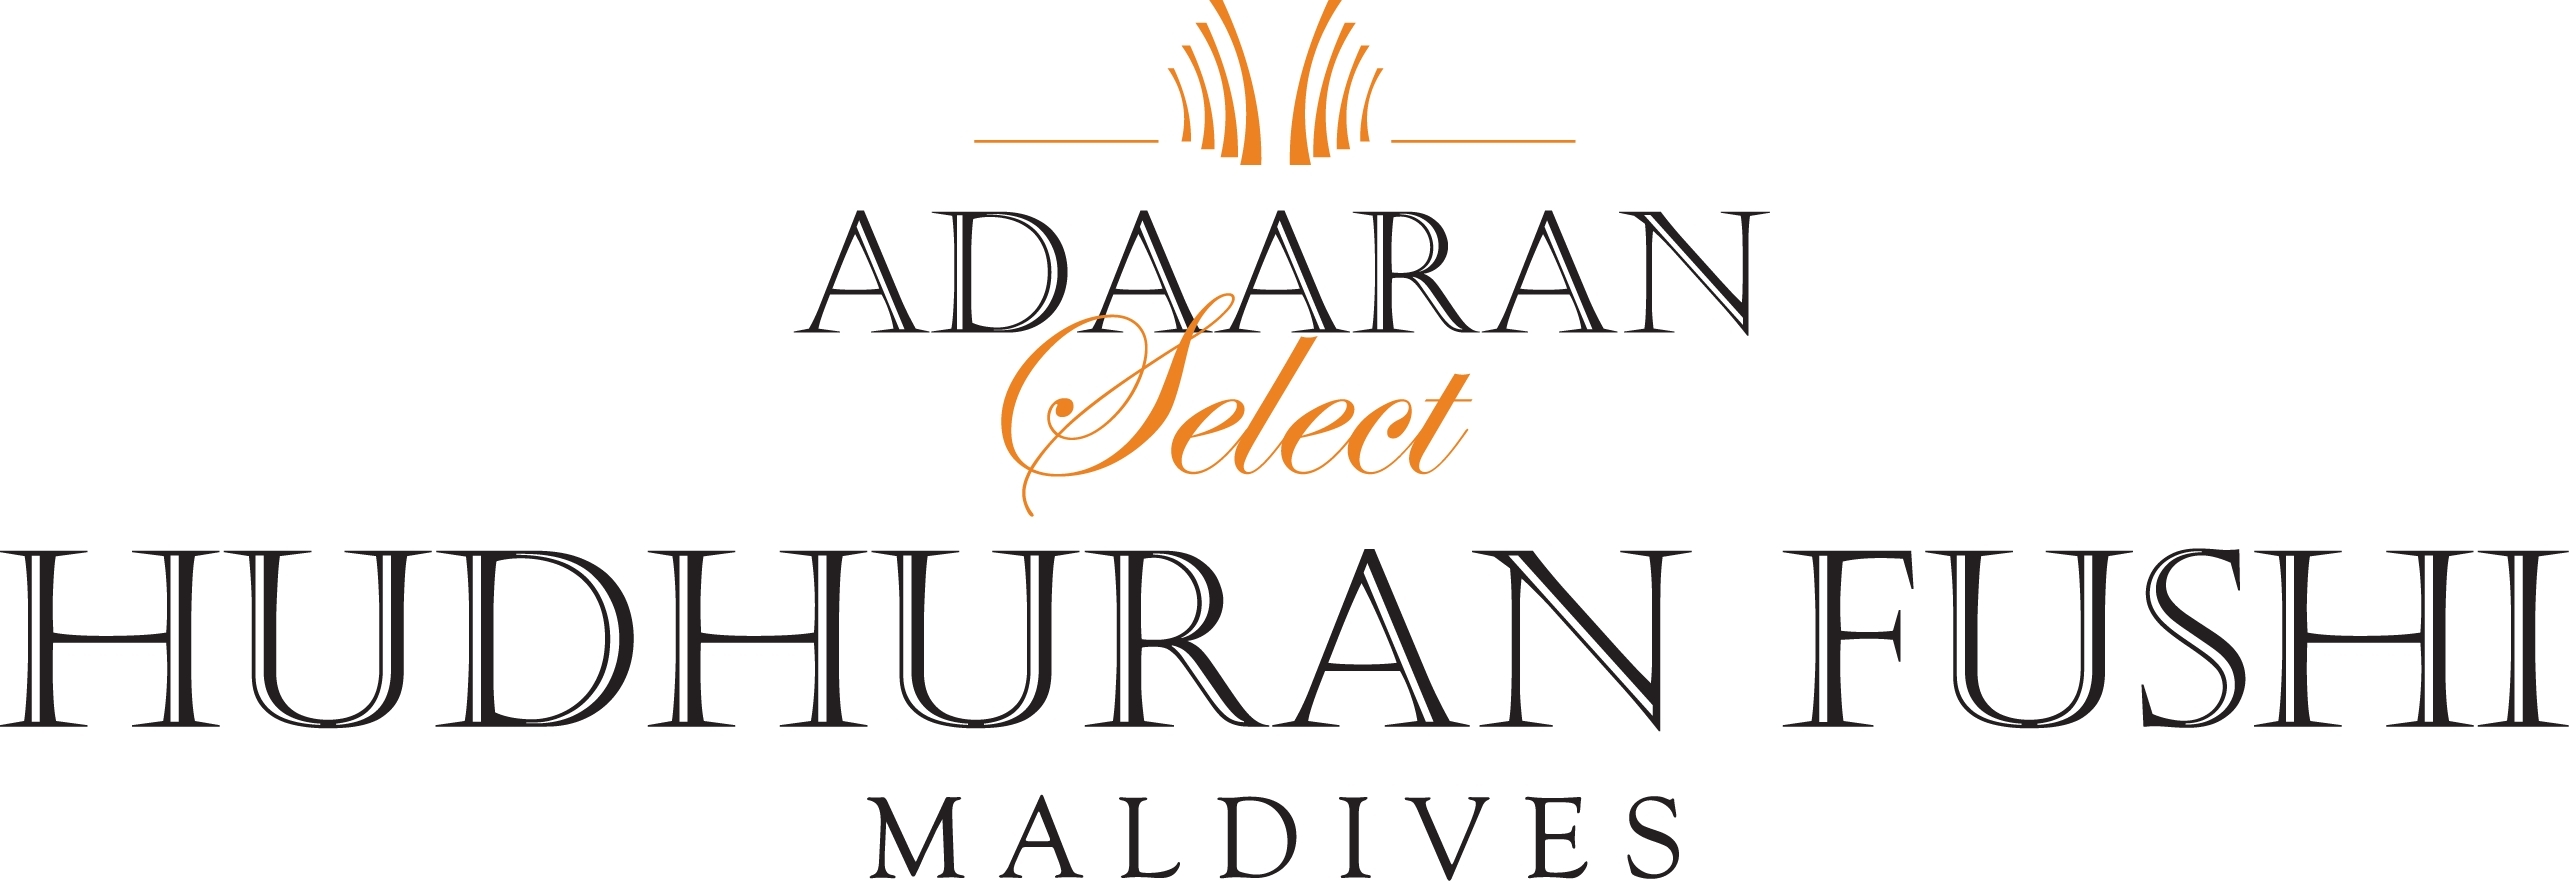 Adaaran Select Hudhuranfushi